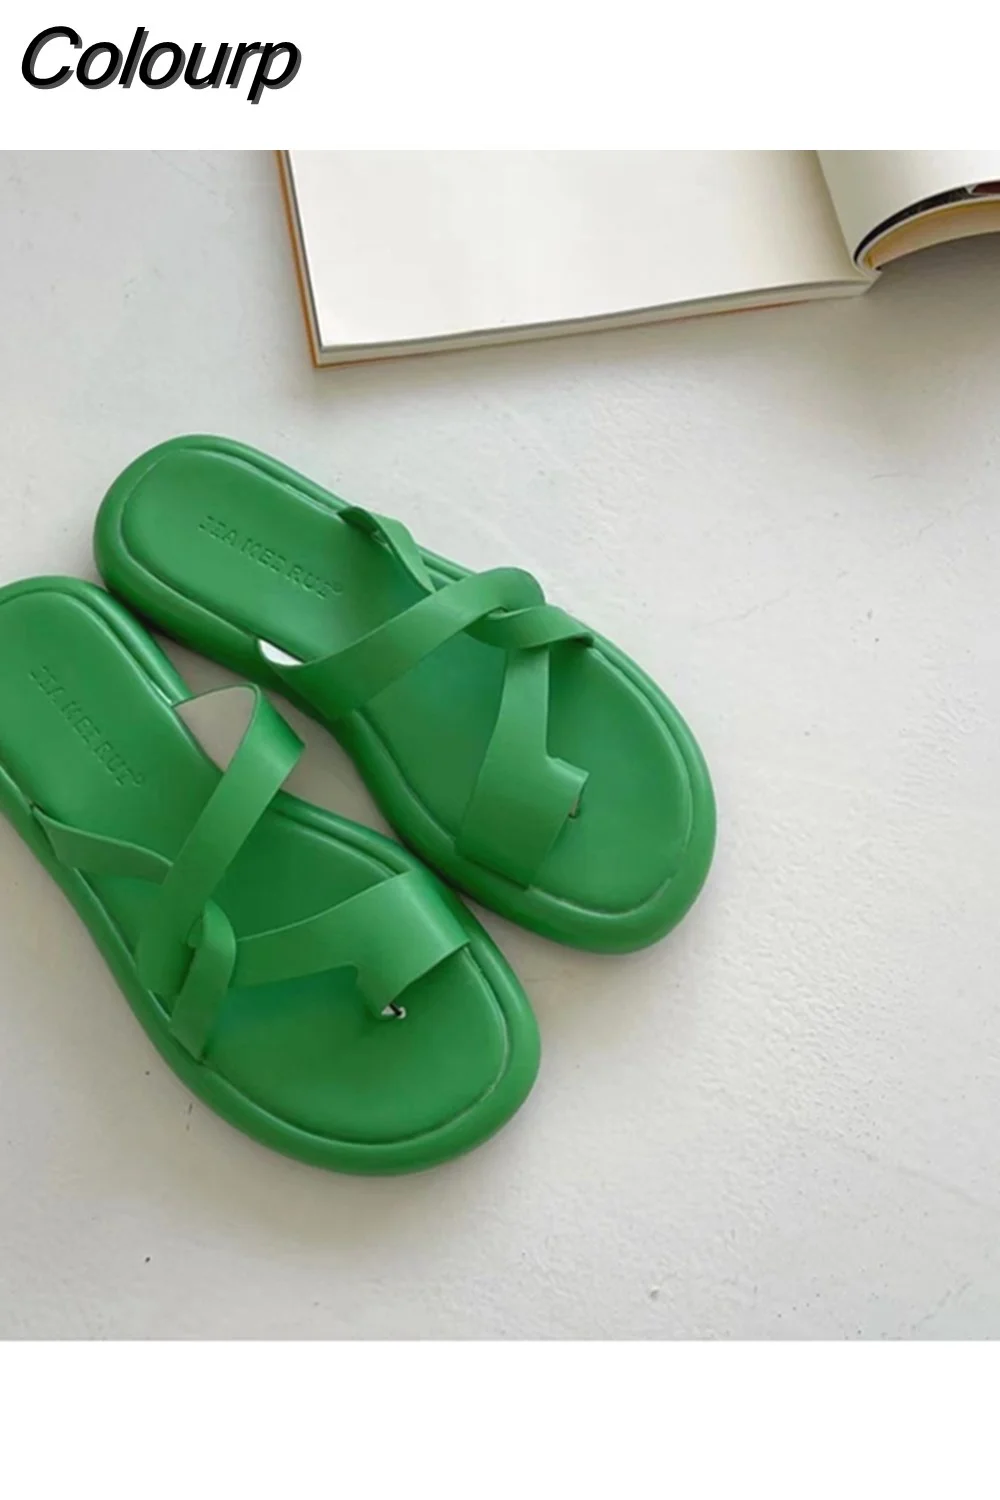 Colourp Wedge Slippers Female Slide Women Casual Flip Flops Brand Sandal 2023 Luxury Soft Flat Beach Shoes Green Sandalias Mujer